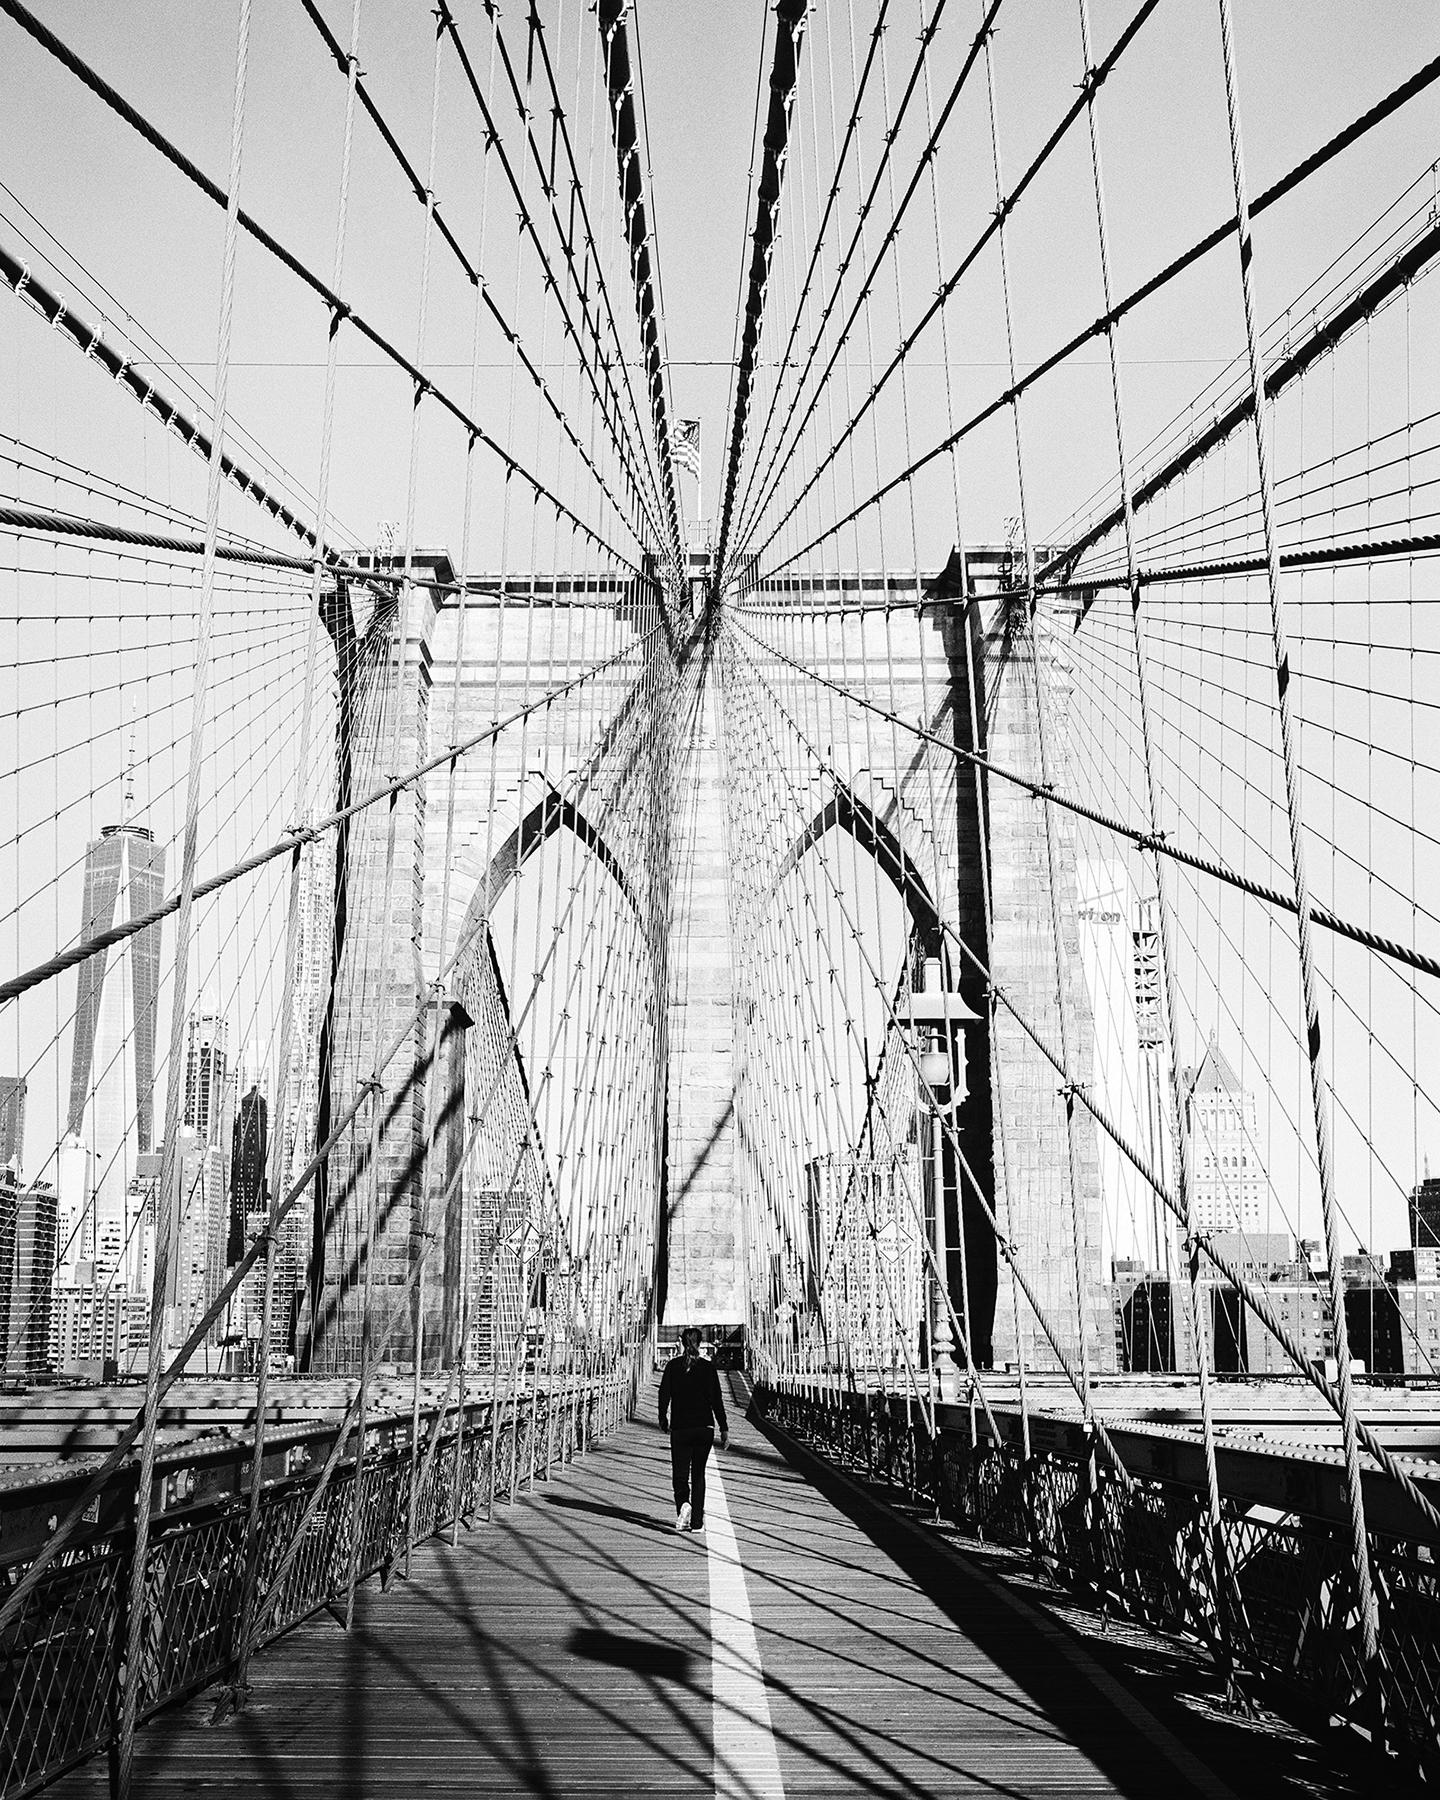 Landscape Photograph Gerald Berghammer - Pont de Brooklyn, New York City, USA, photographie noir et blanc, art paysage urbain